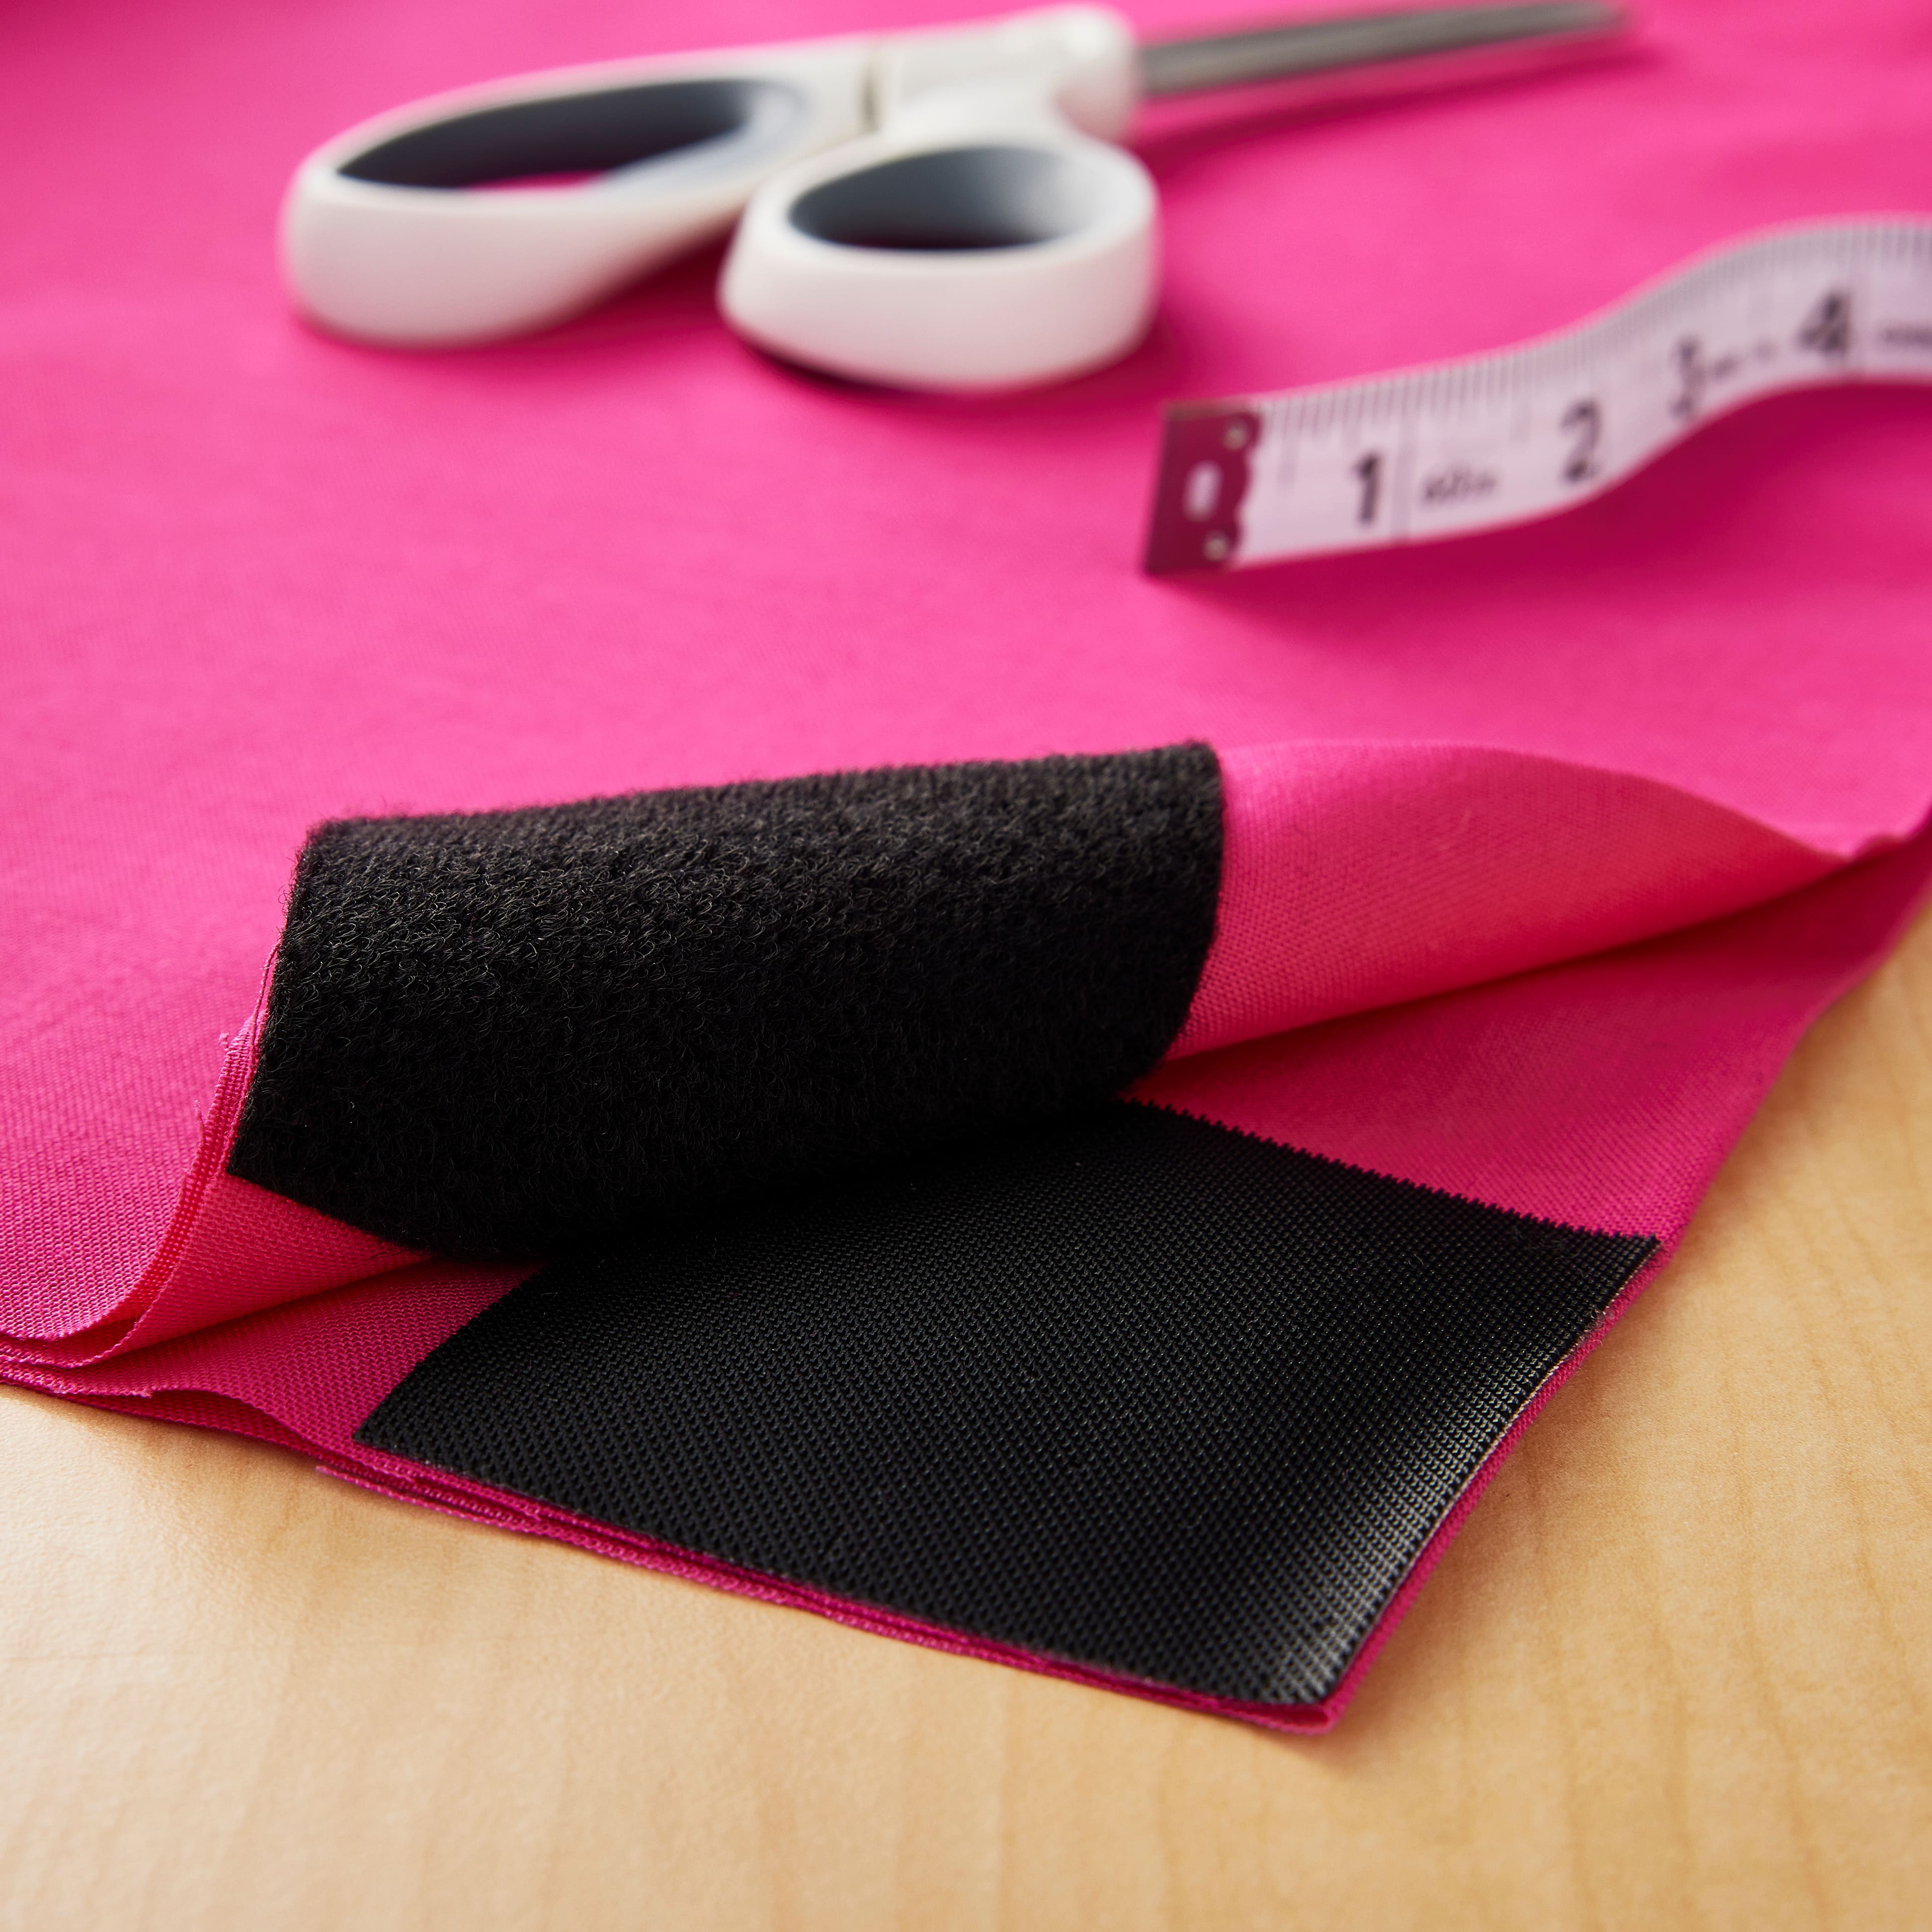 VELCRO Brand Sleek & Thin Stick On Fastener for Fabrics Strong